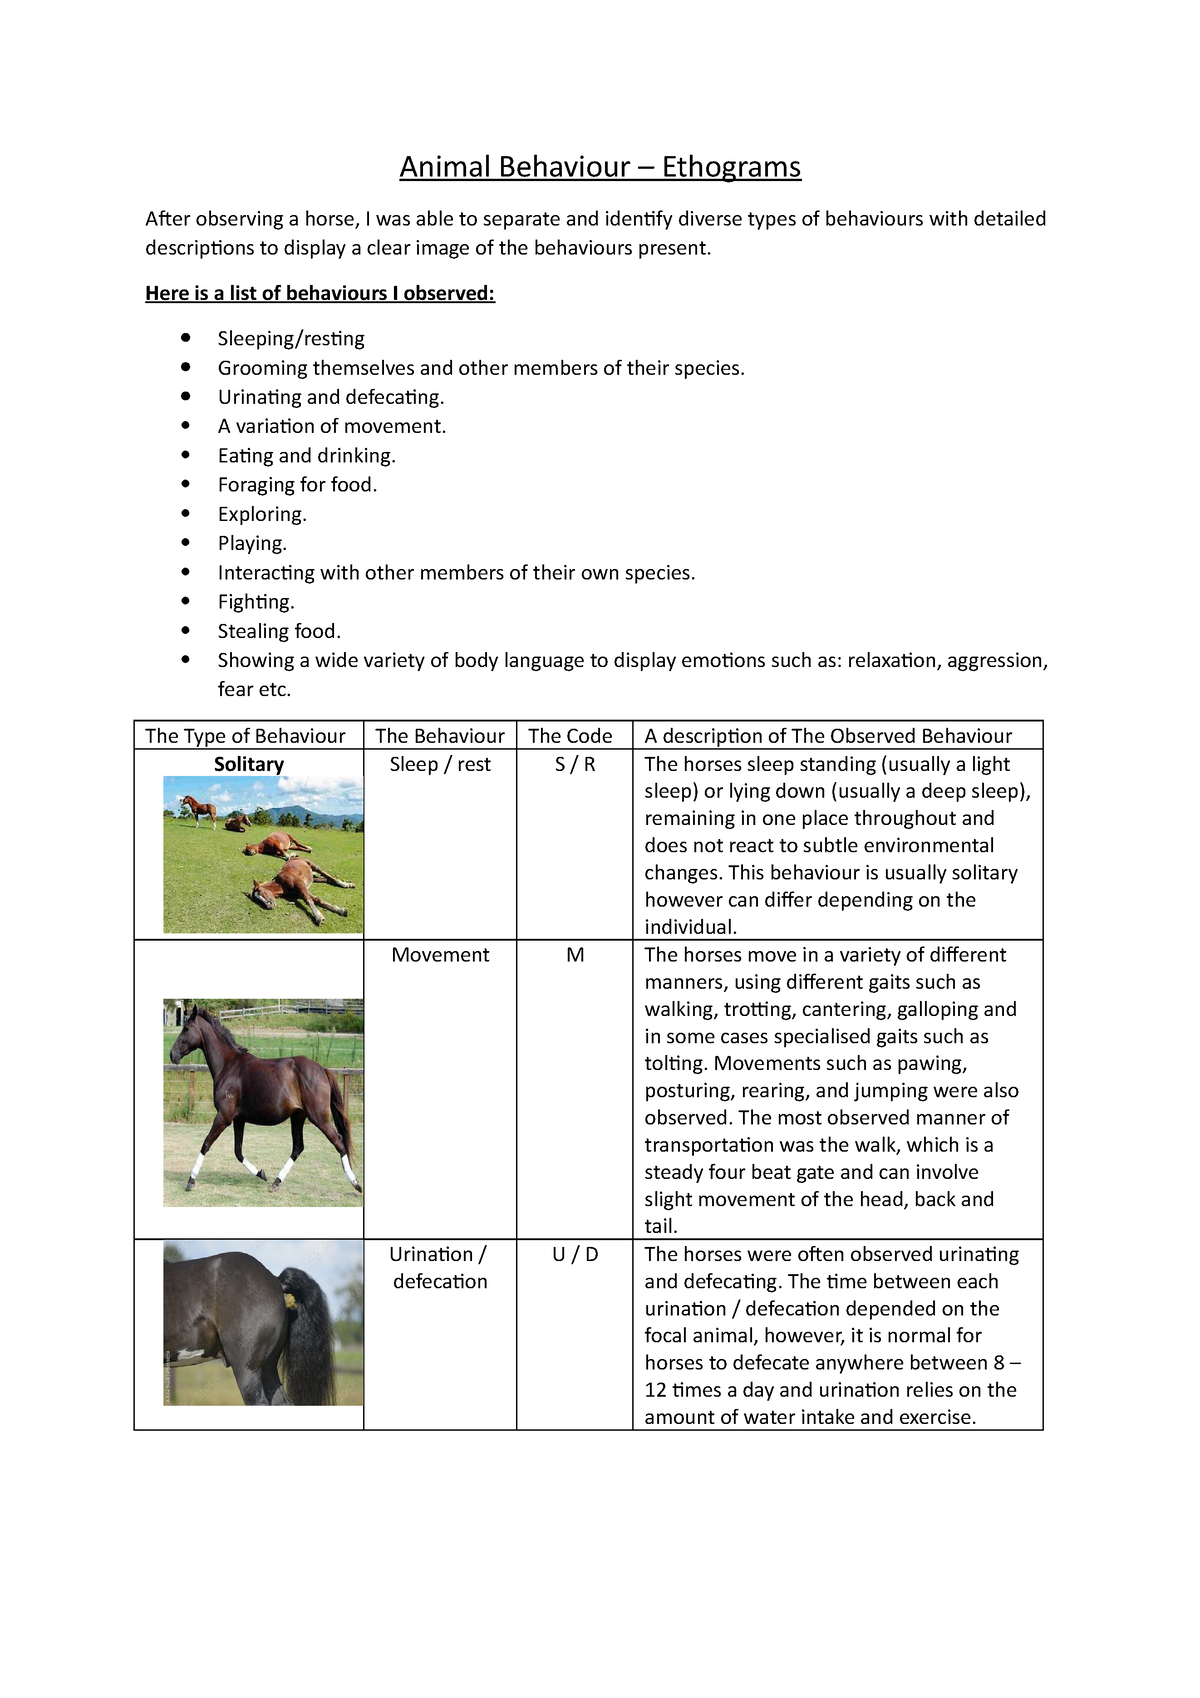 Animal Behaviour - Equine Ethogram - Animal Behaviour – Ethograms After  observing a horse, I was - Studocu